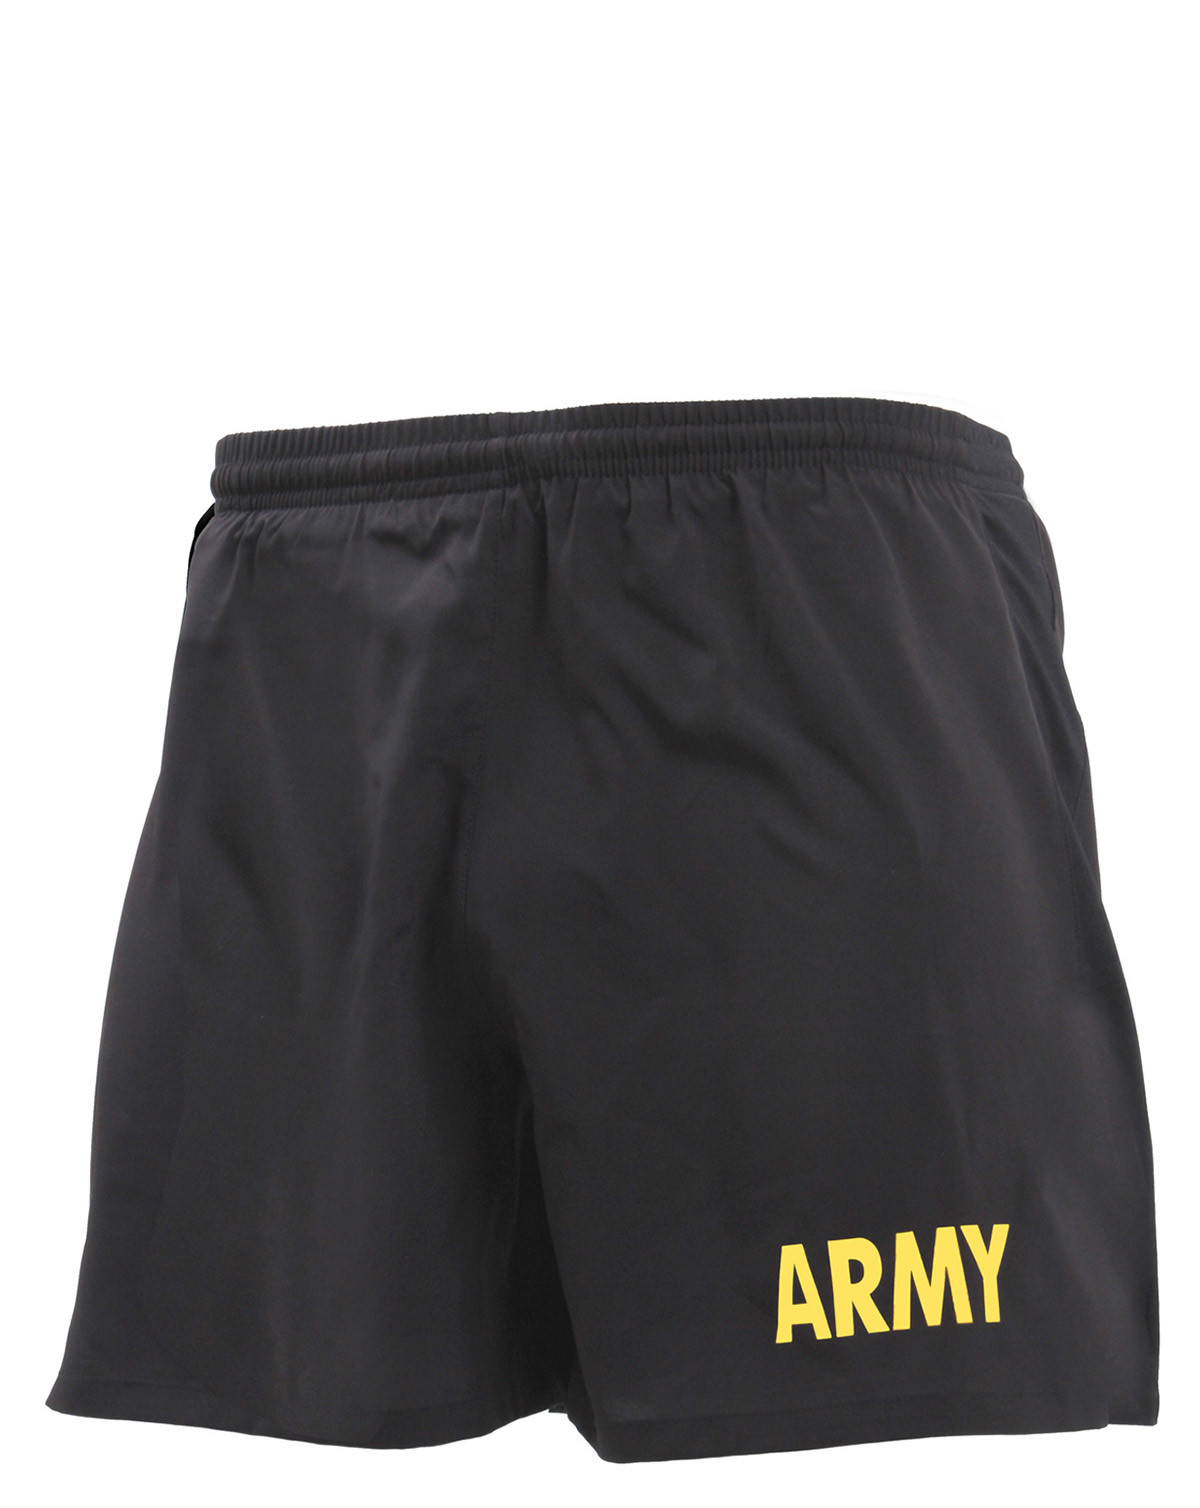 Rothco Army PT Trænings Shorts (Sort, M)